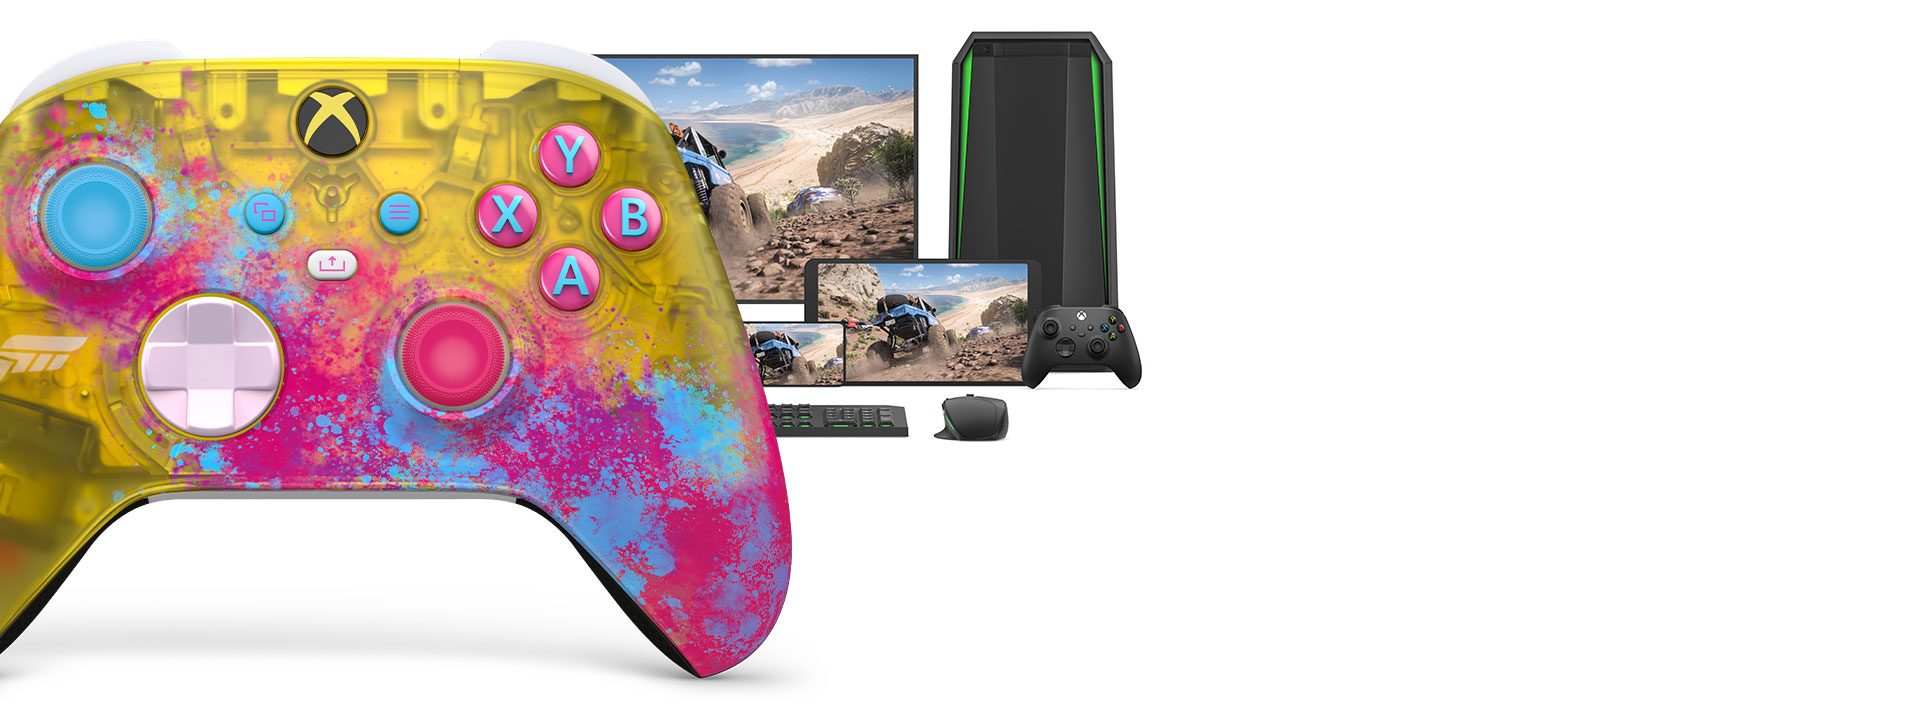 Xbox ワイヤレス コントローラー Forza Horizon 5 - 家庭用ゲーム本体